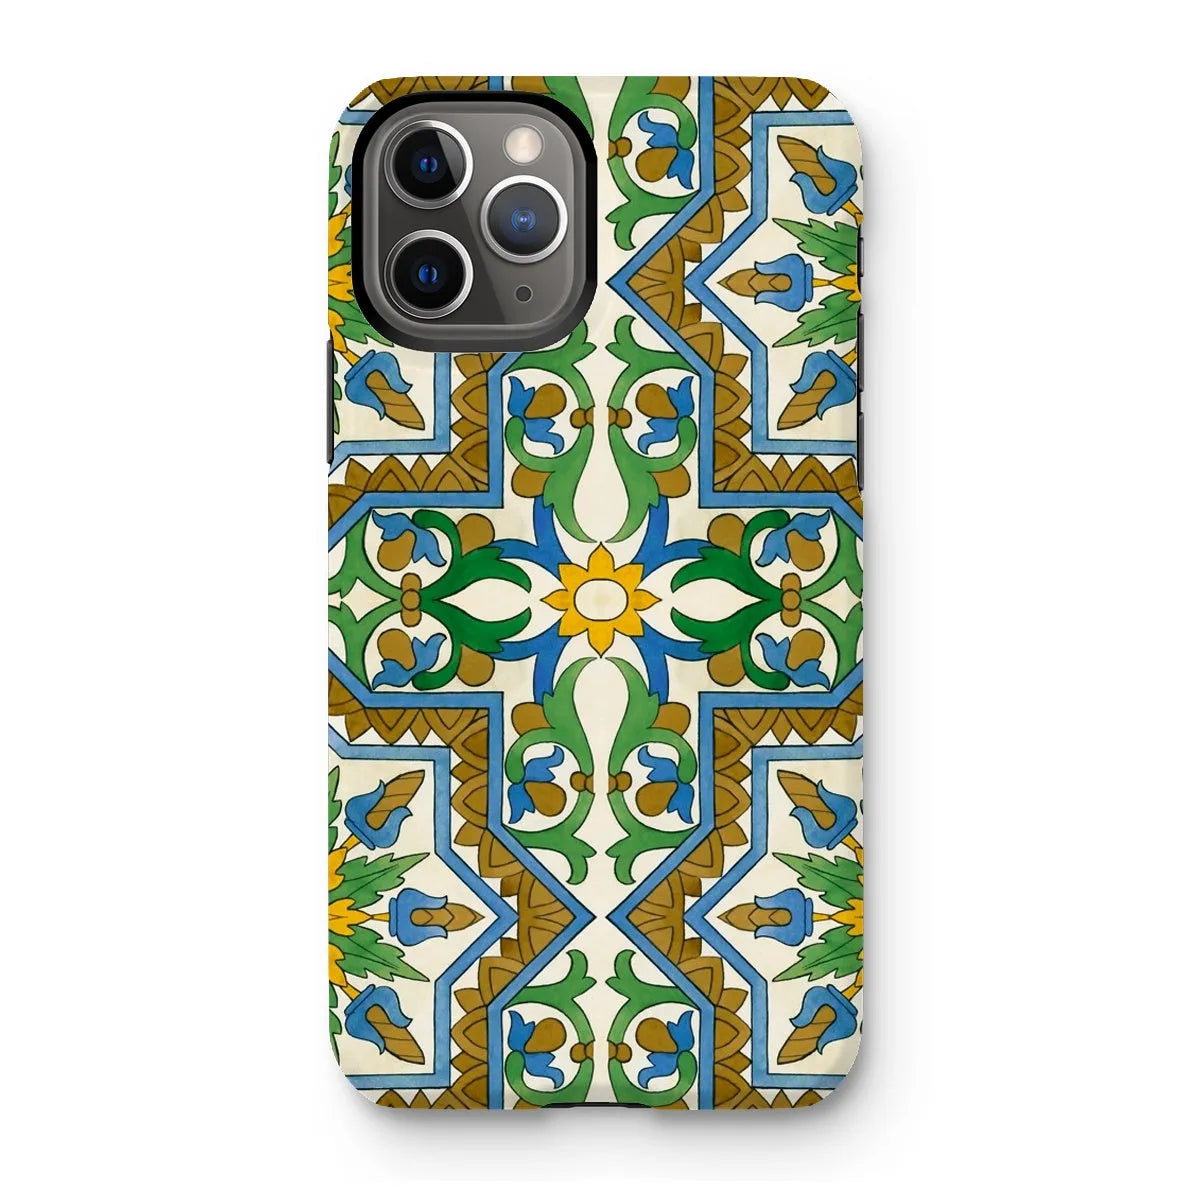 Moreish Moorish - Spanish Aesthetic Pattern Phone Case - Iphone 11 Pro / Matte - Mobile Phone Cases - Aesthetic Art